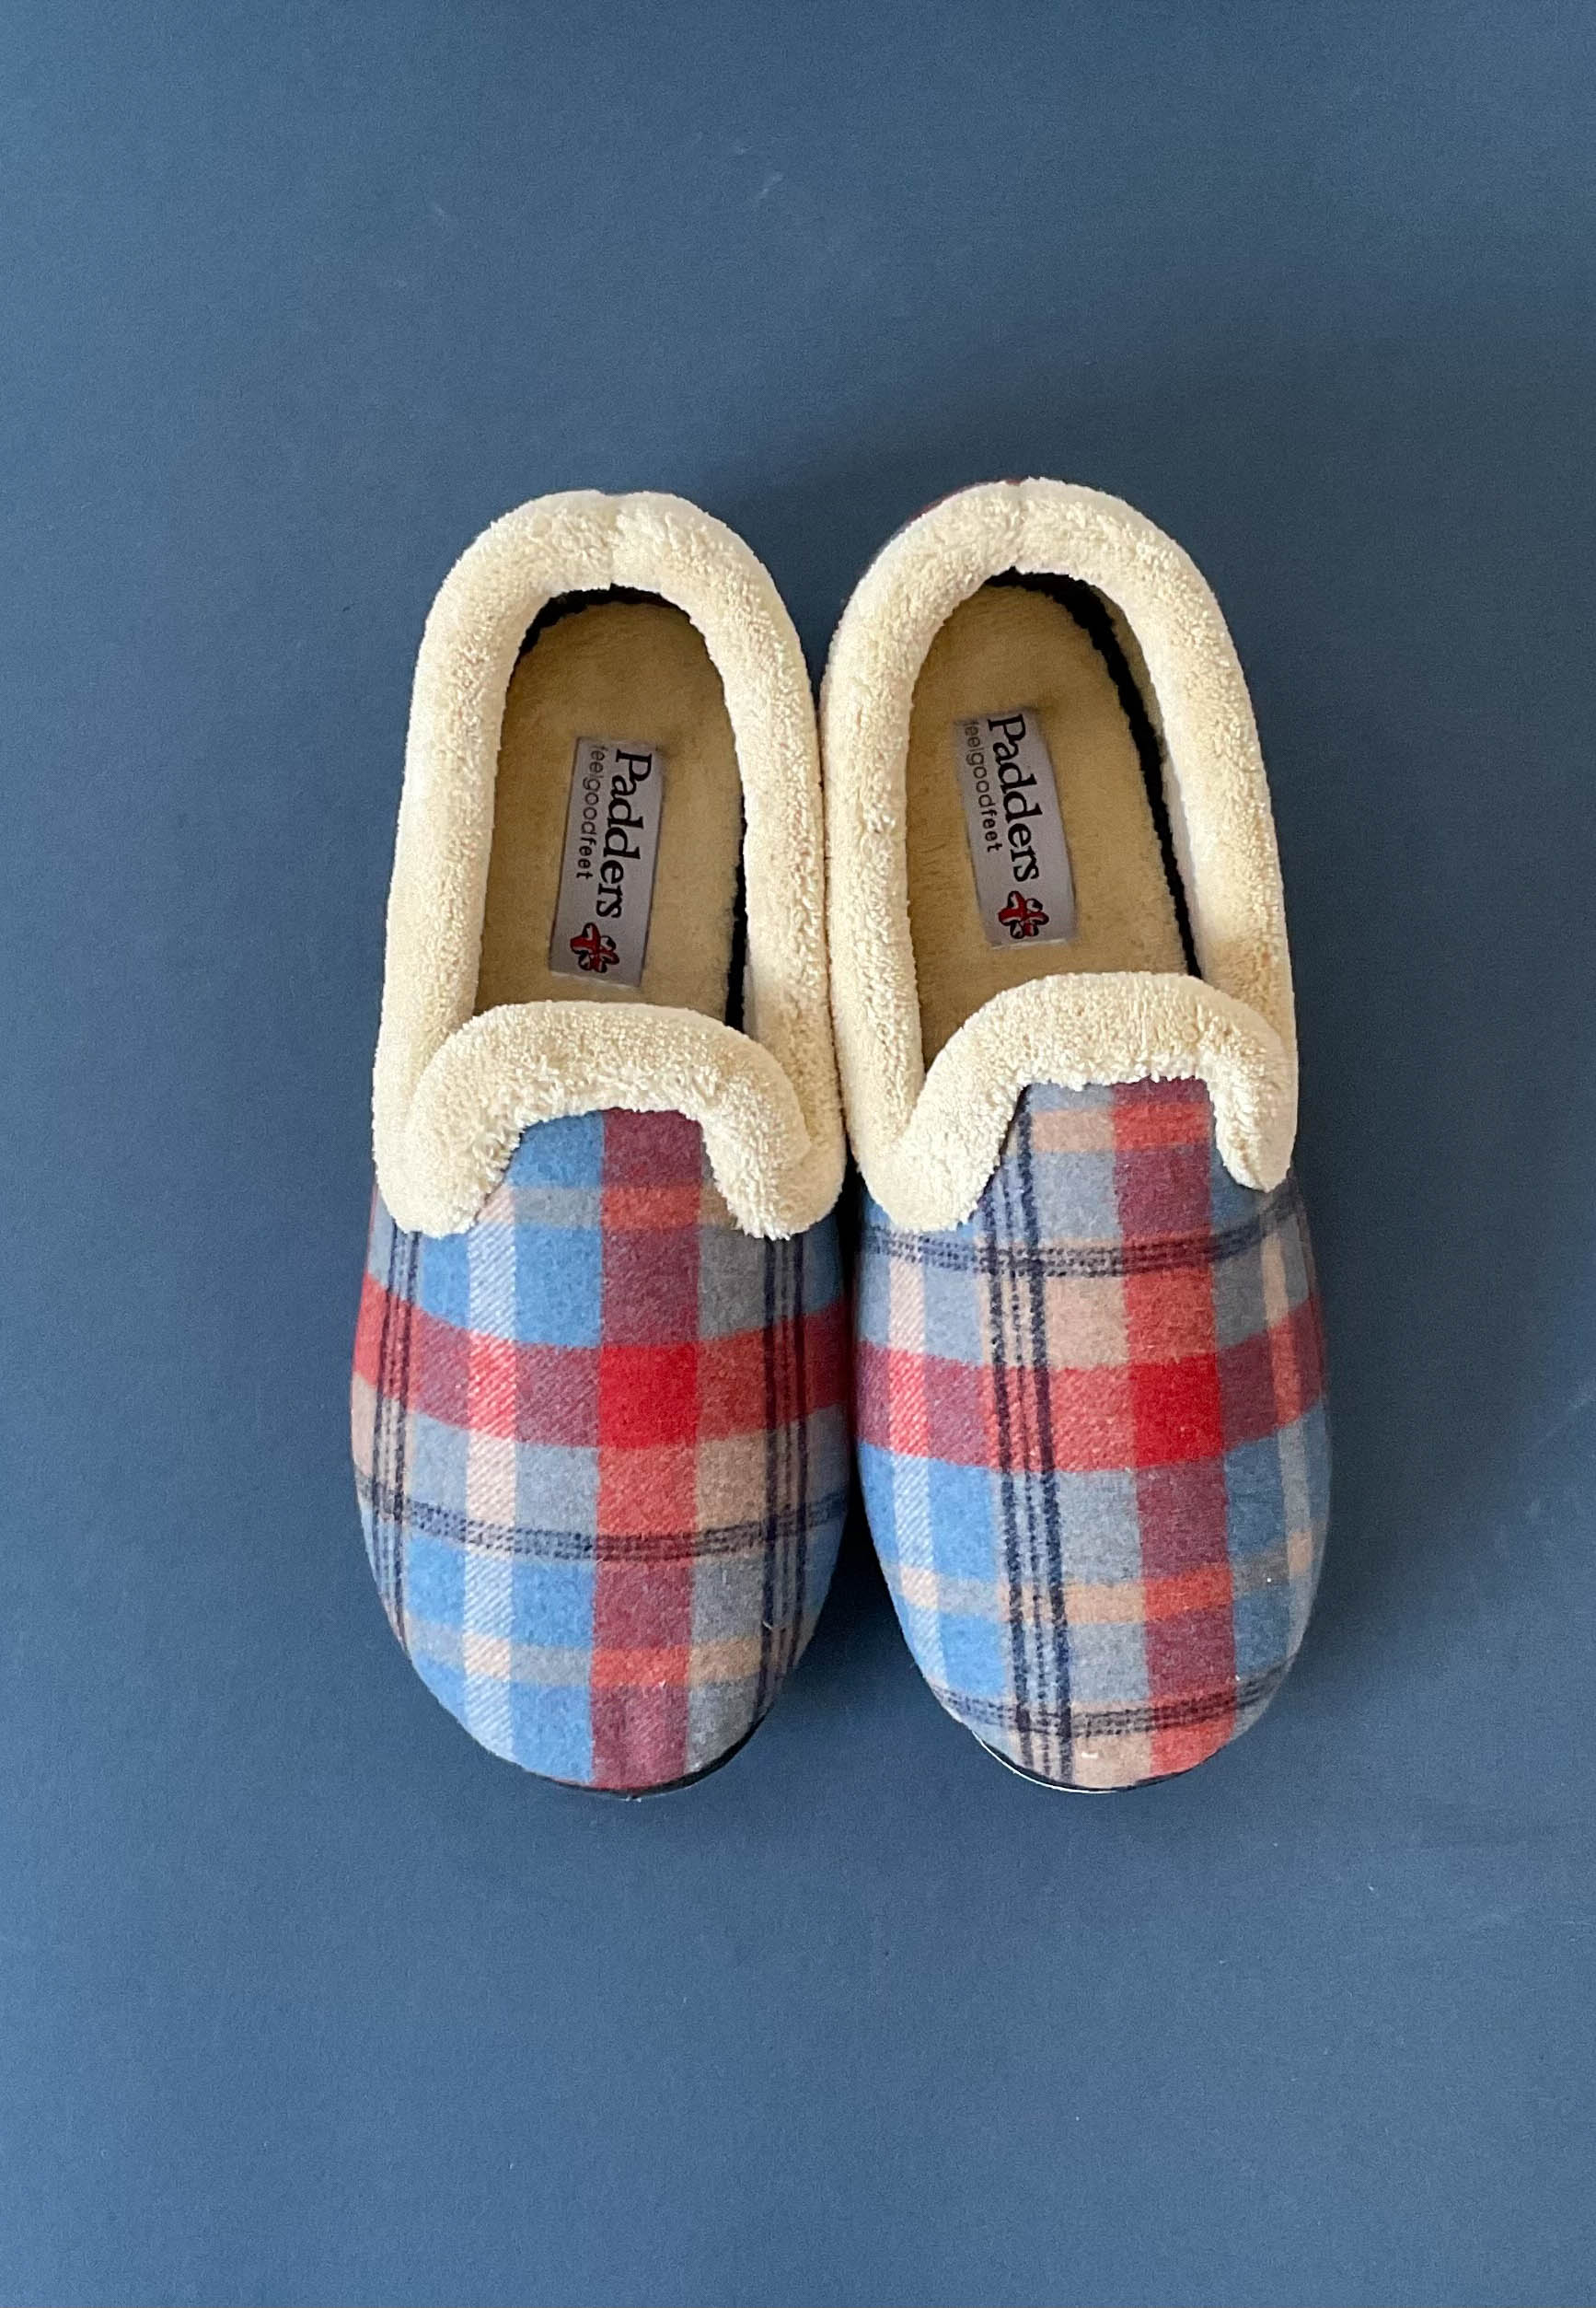 Padders shoe slippers